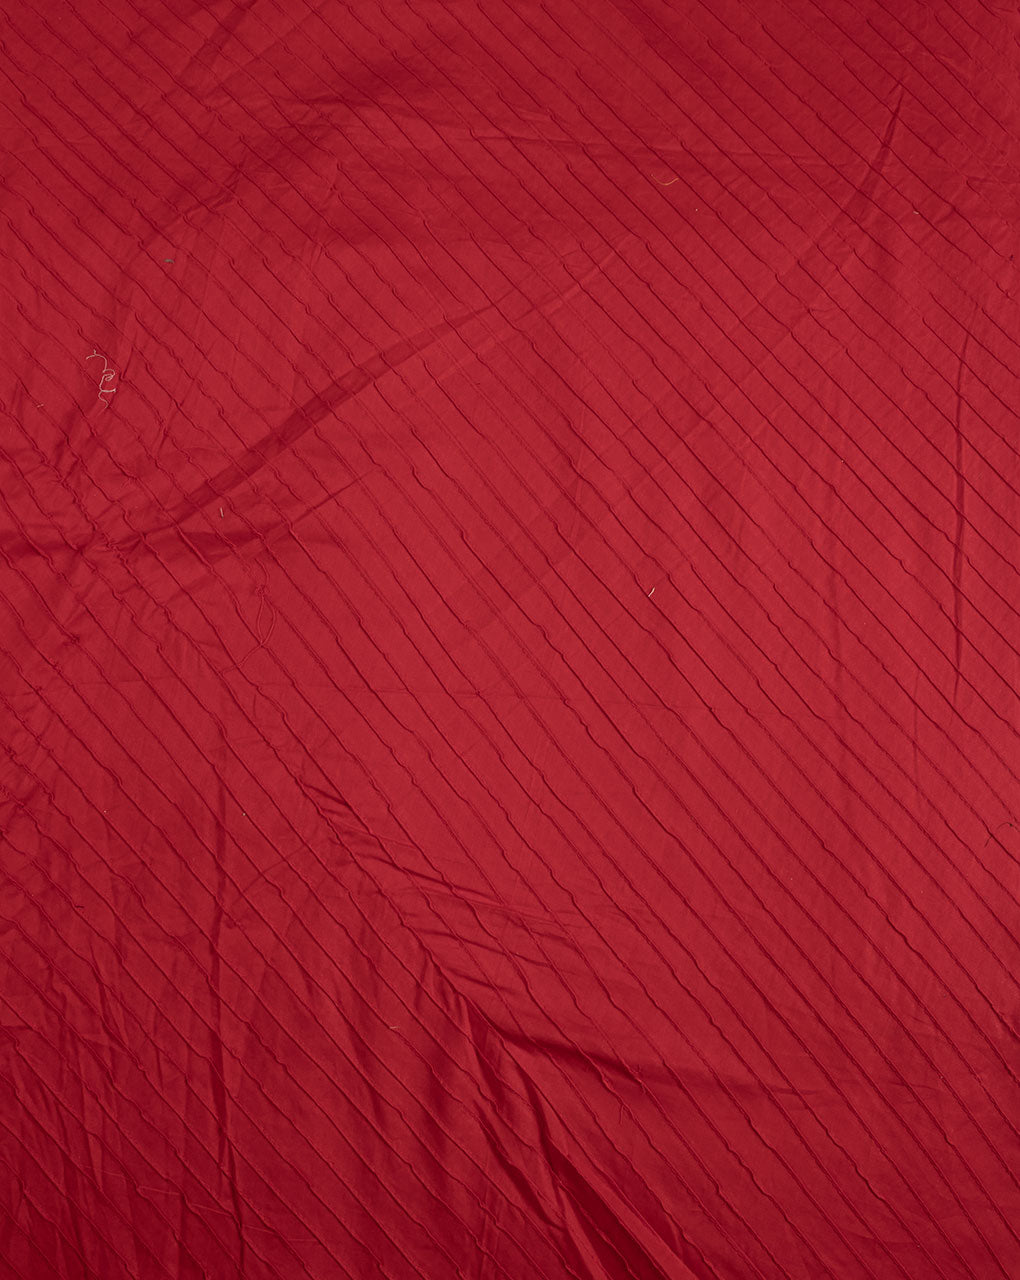 Red Pin-Tucks Cotton Fabric ( Width 40 Inch ) - Fabriclore.com